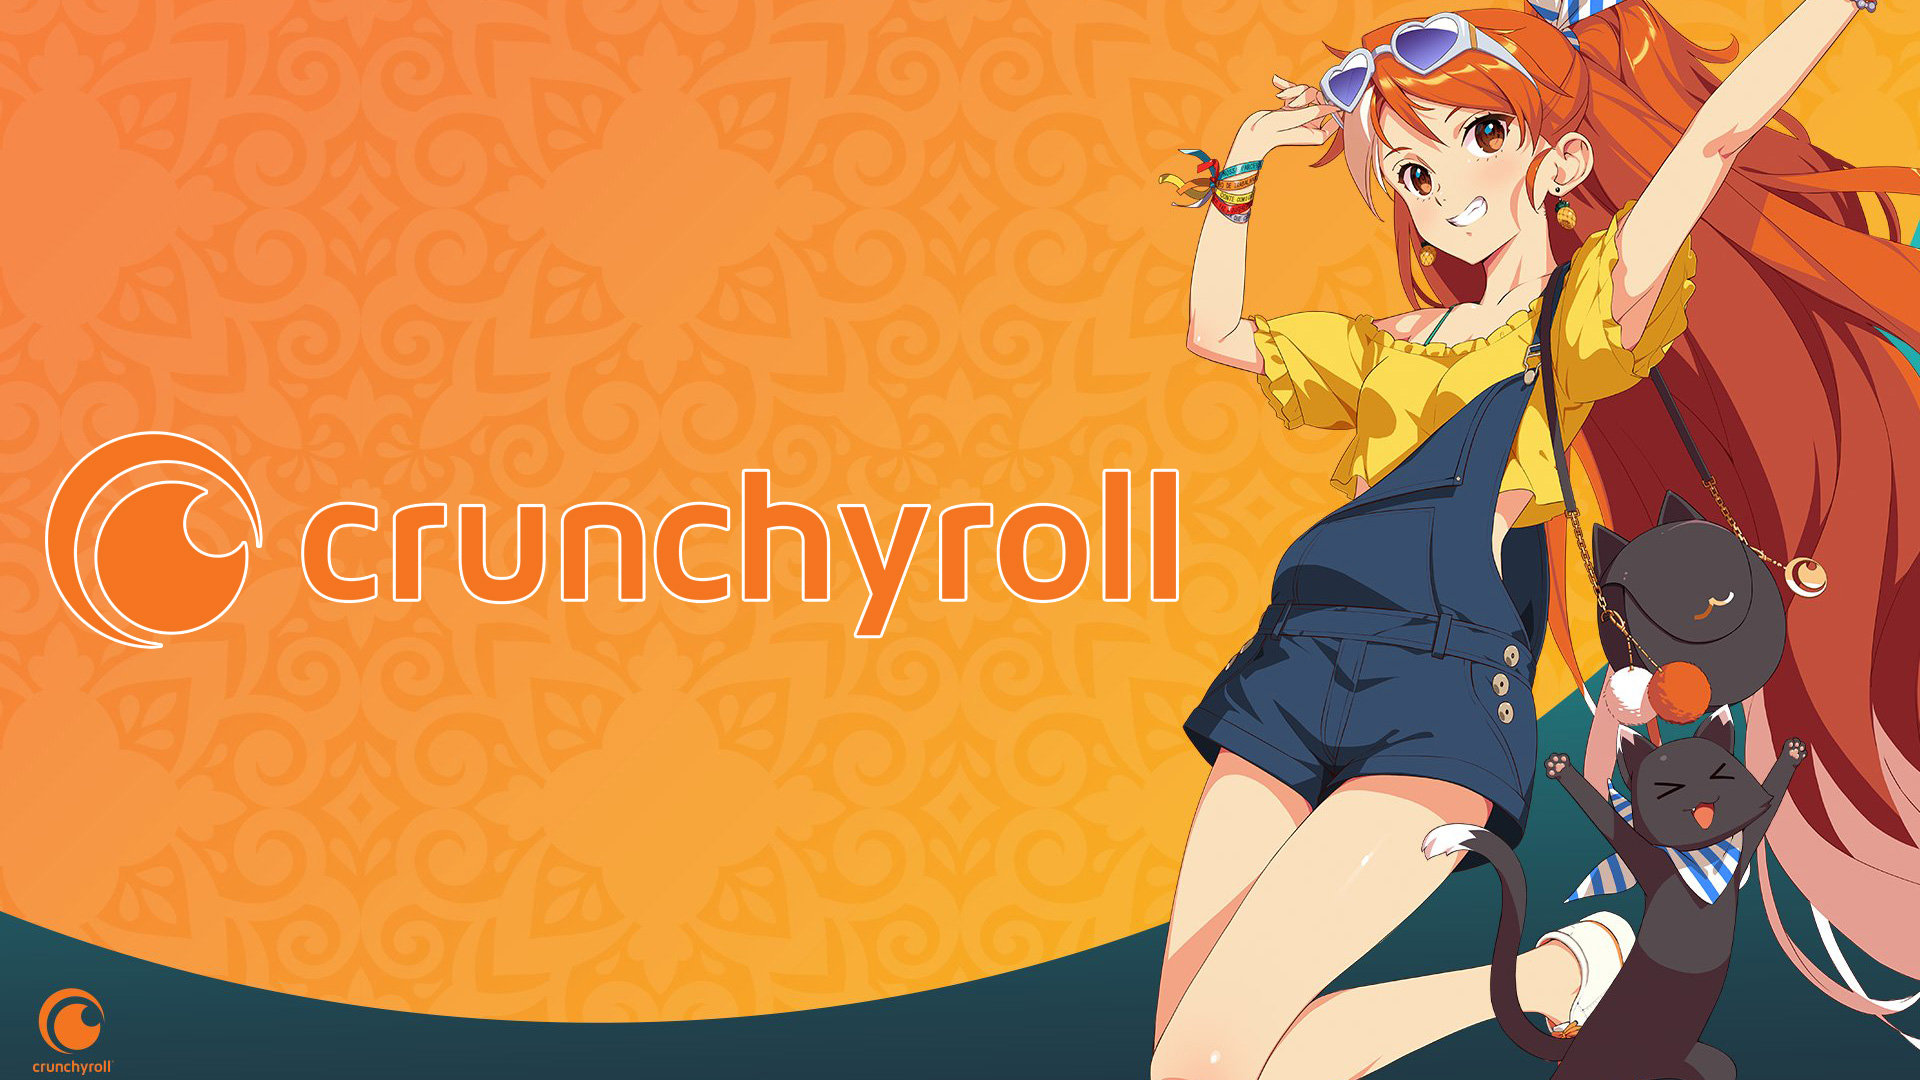 Confira todos os animes da Funimation que entraram na Crunchyroll